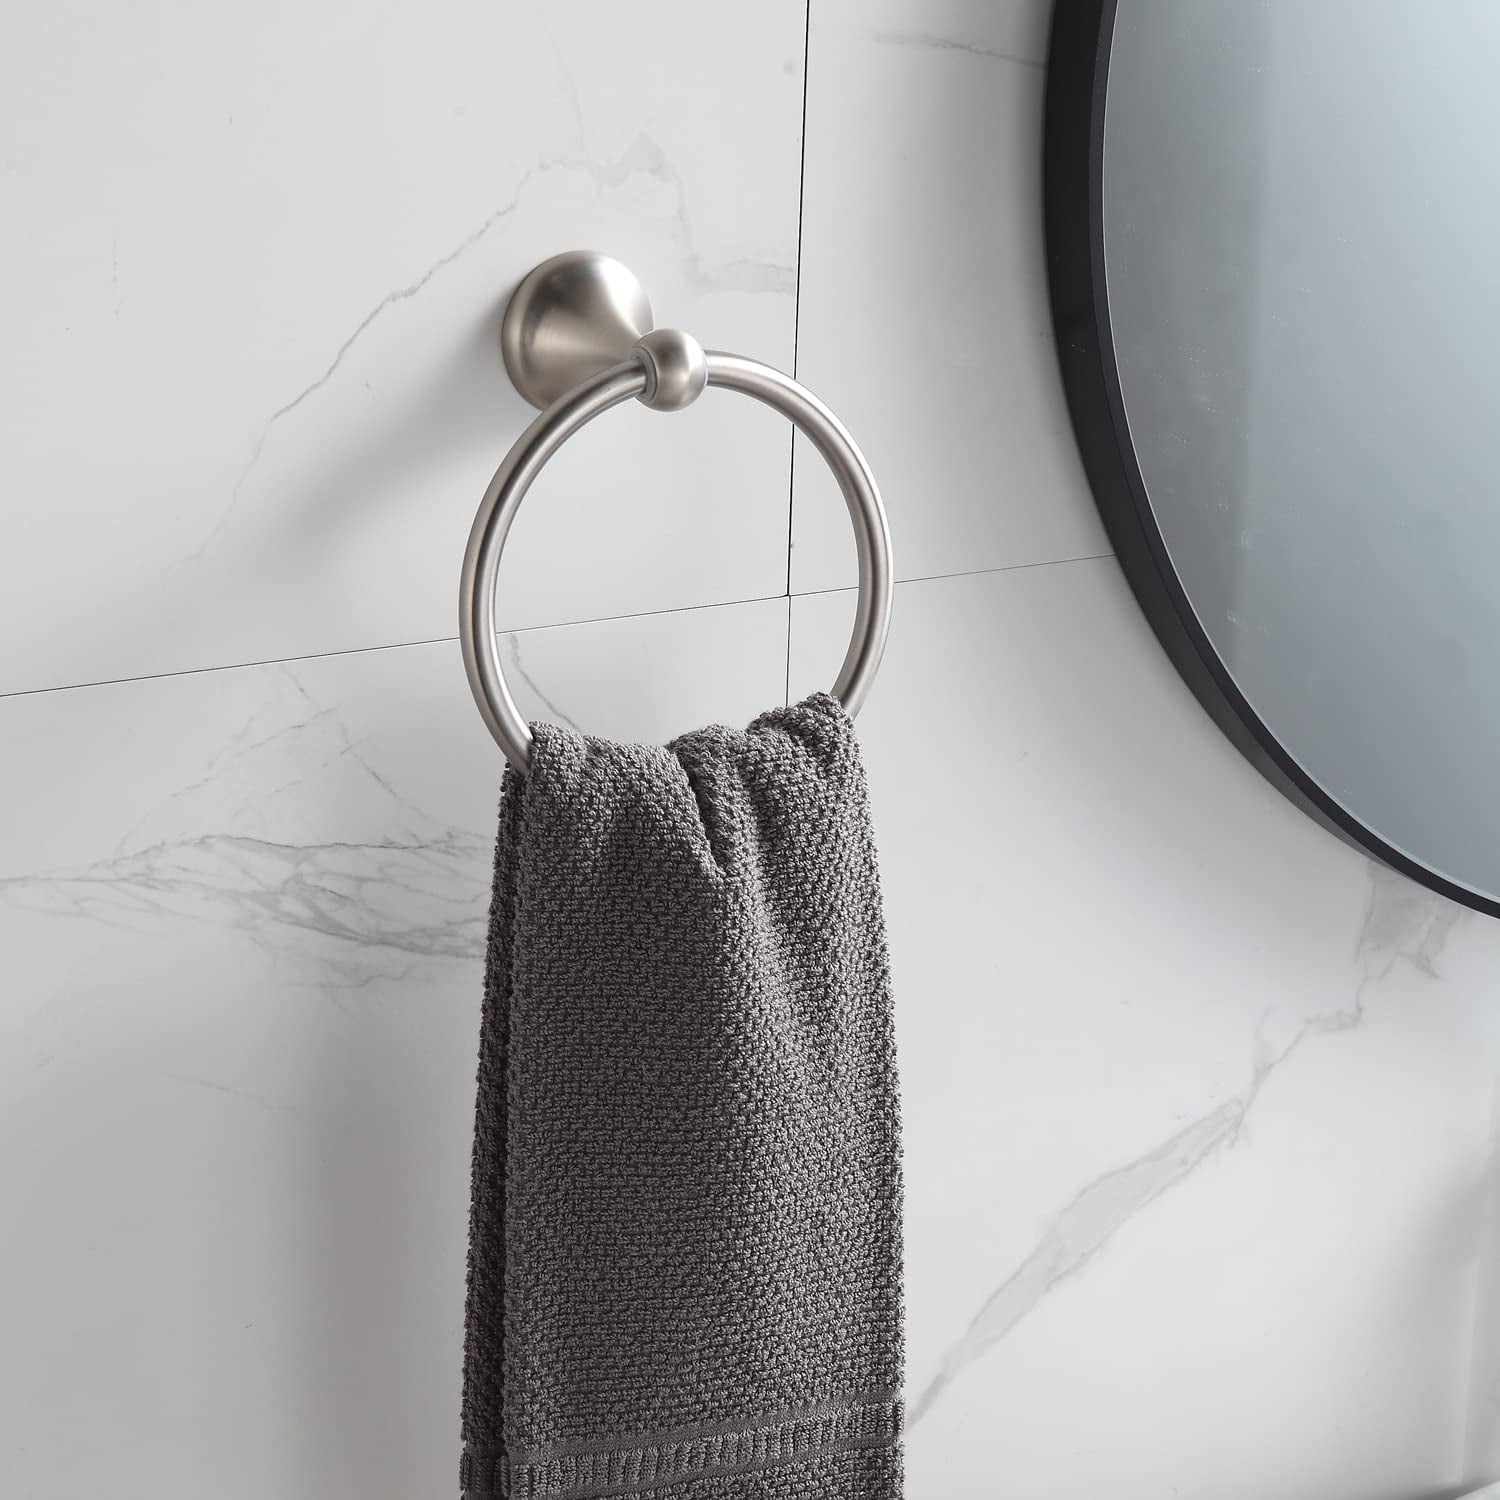 BGL Bathroom Accessory Set, Brushed Nickel Adjustable Expandable Towel Bar  4-Piece Bathroom Hardware Set Wall Mounted